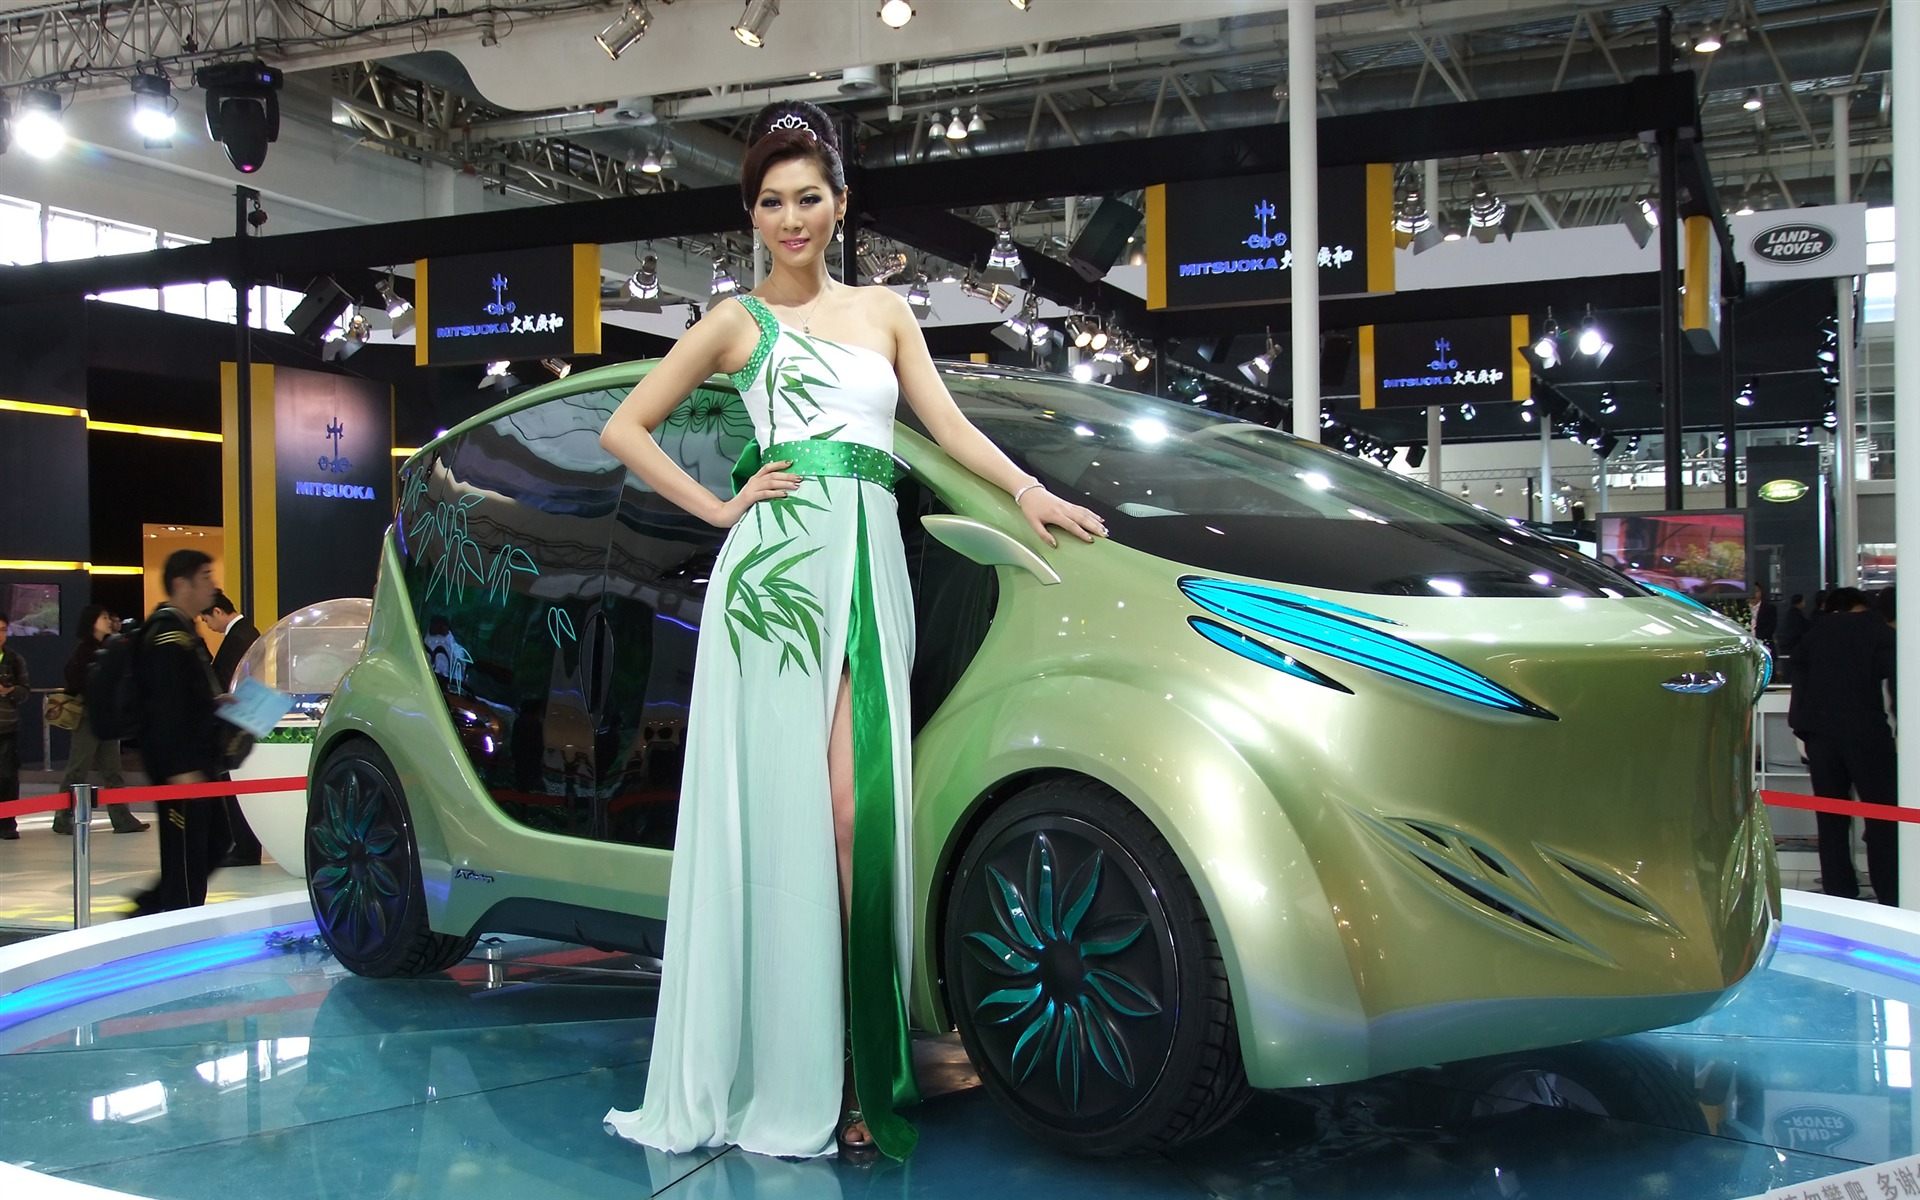 2010 Peking autosalonu modely aut odběrem (2) #2 - 1920x1200